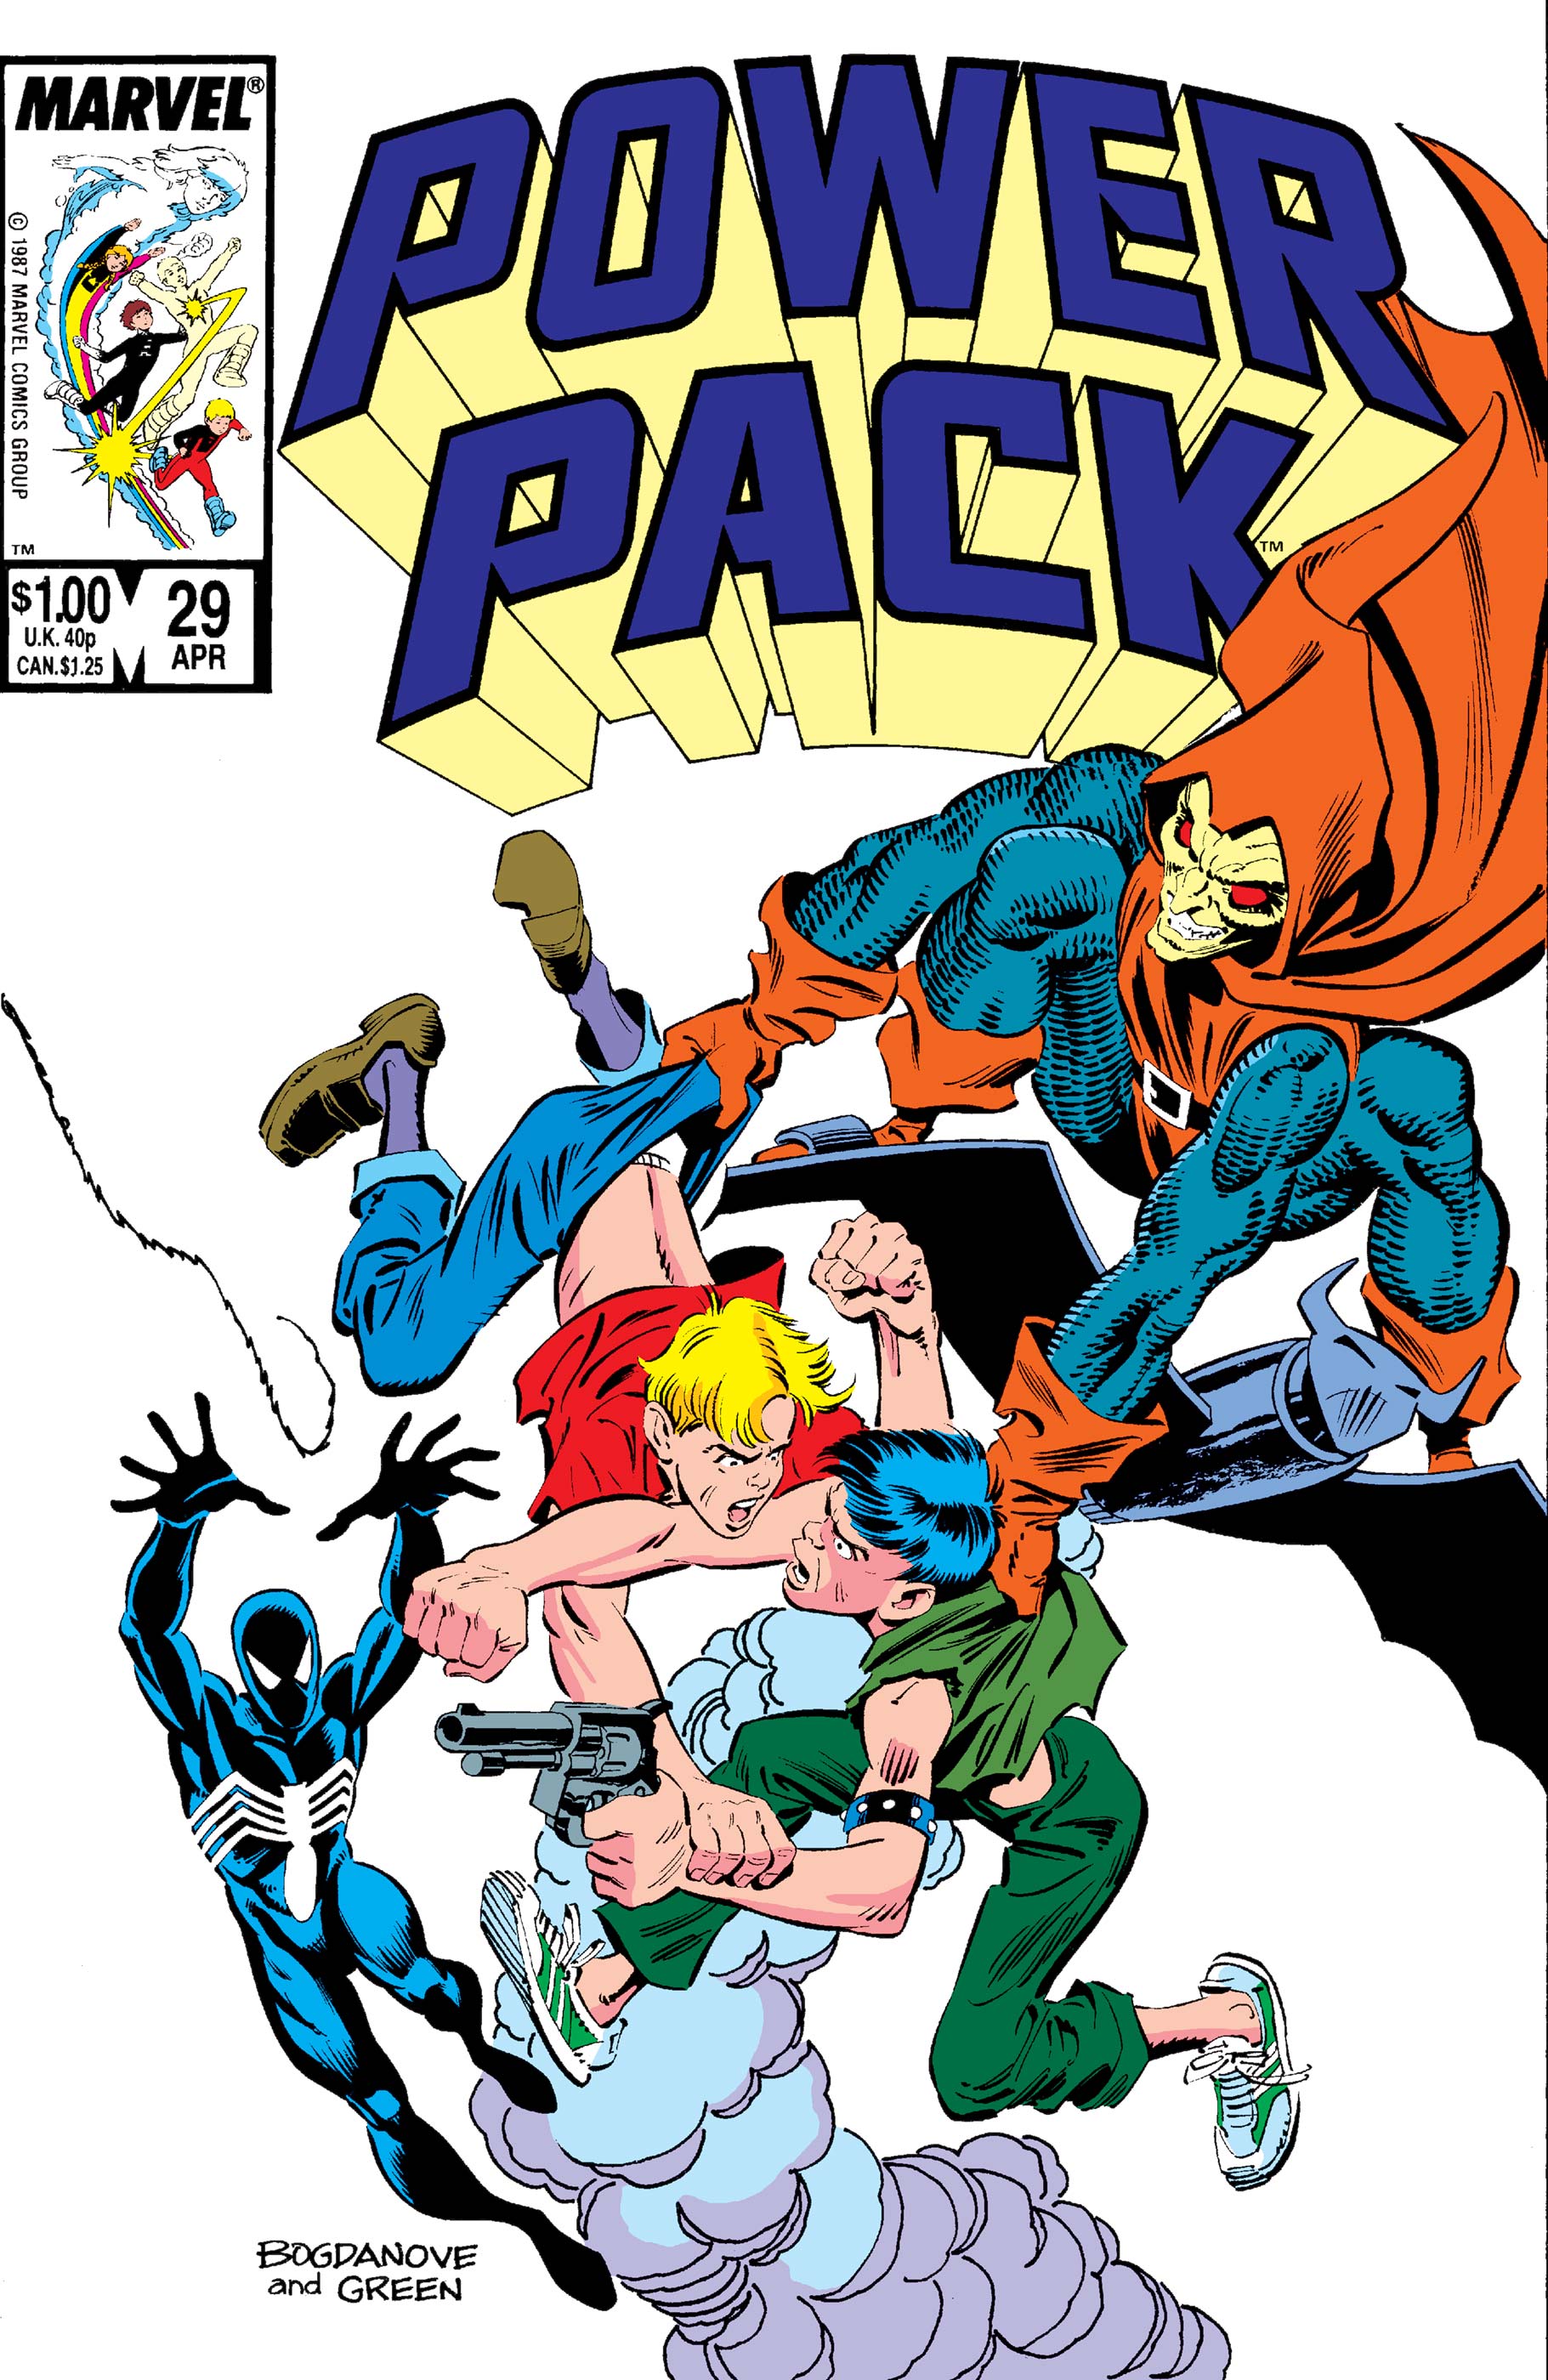 Power Pack комикс. Пауэр читает. Energy Pack комикс. Power packing комиксы